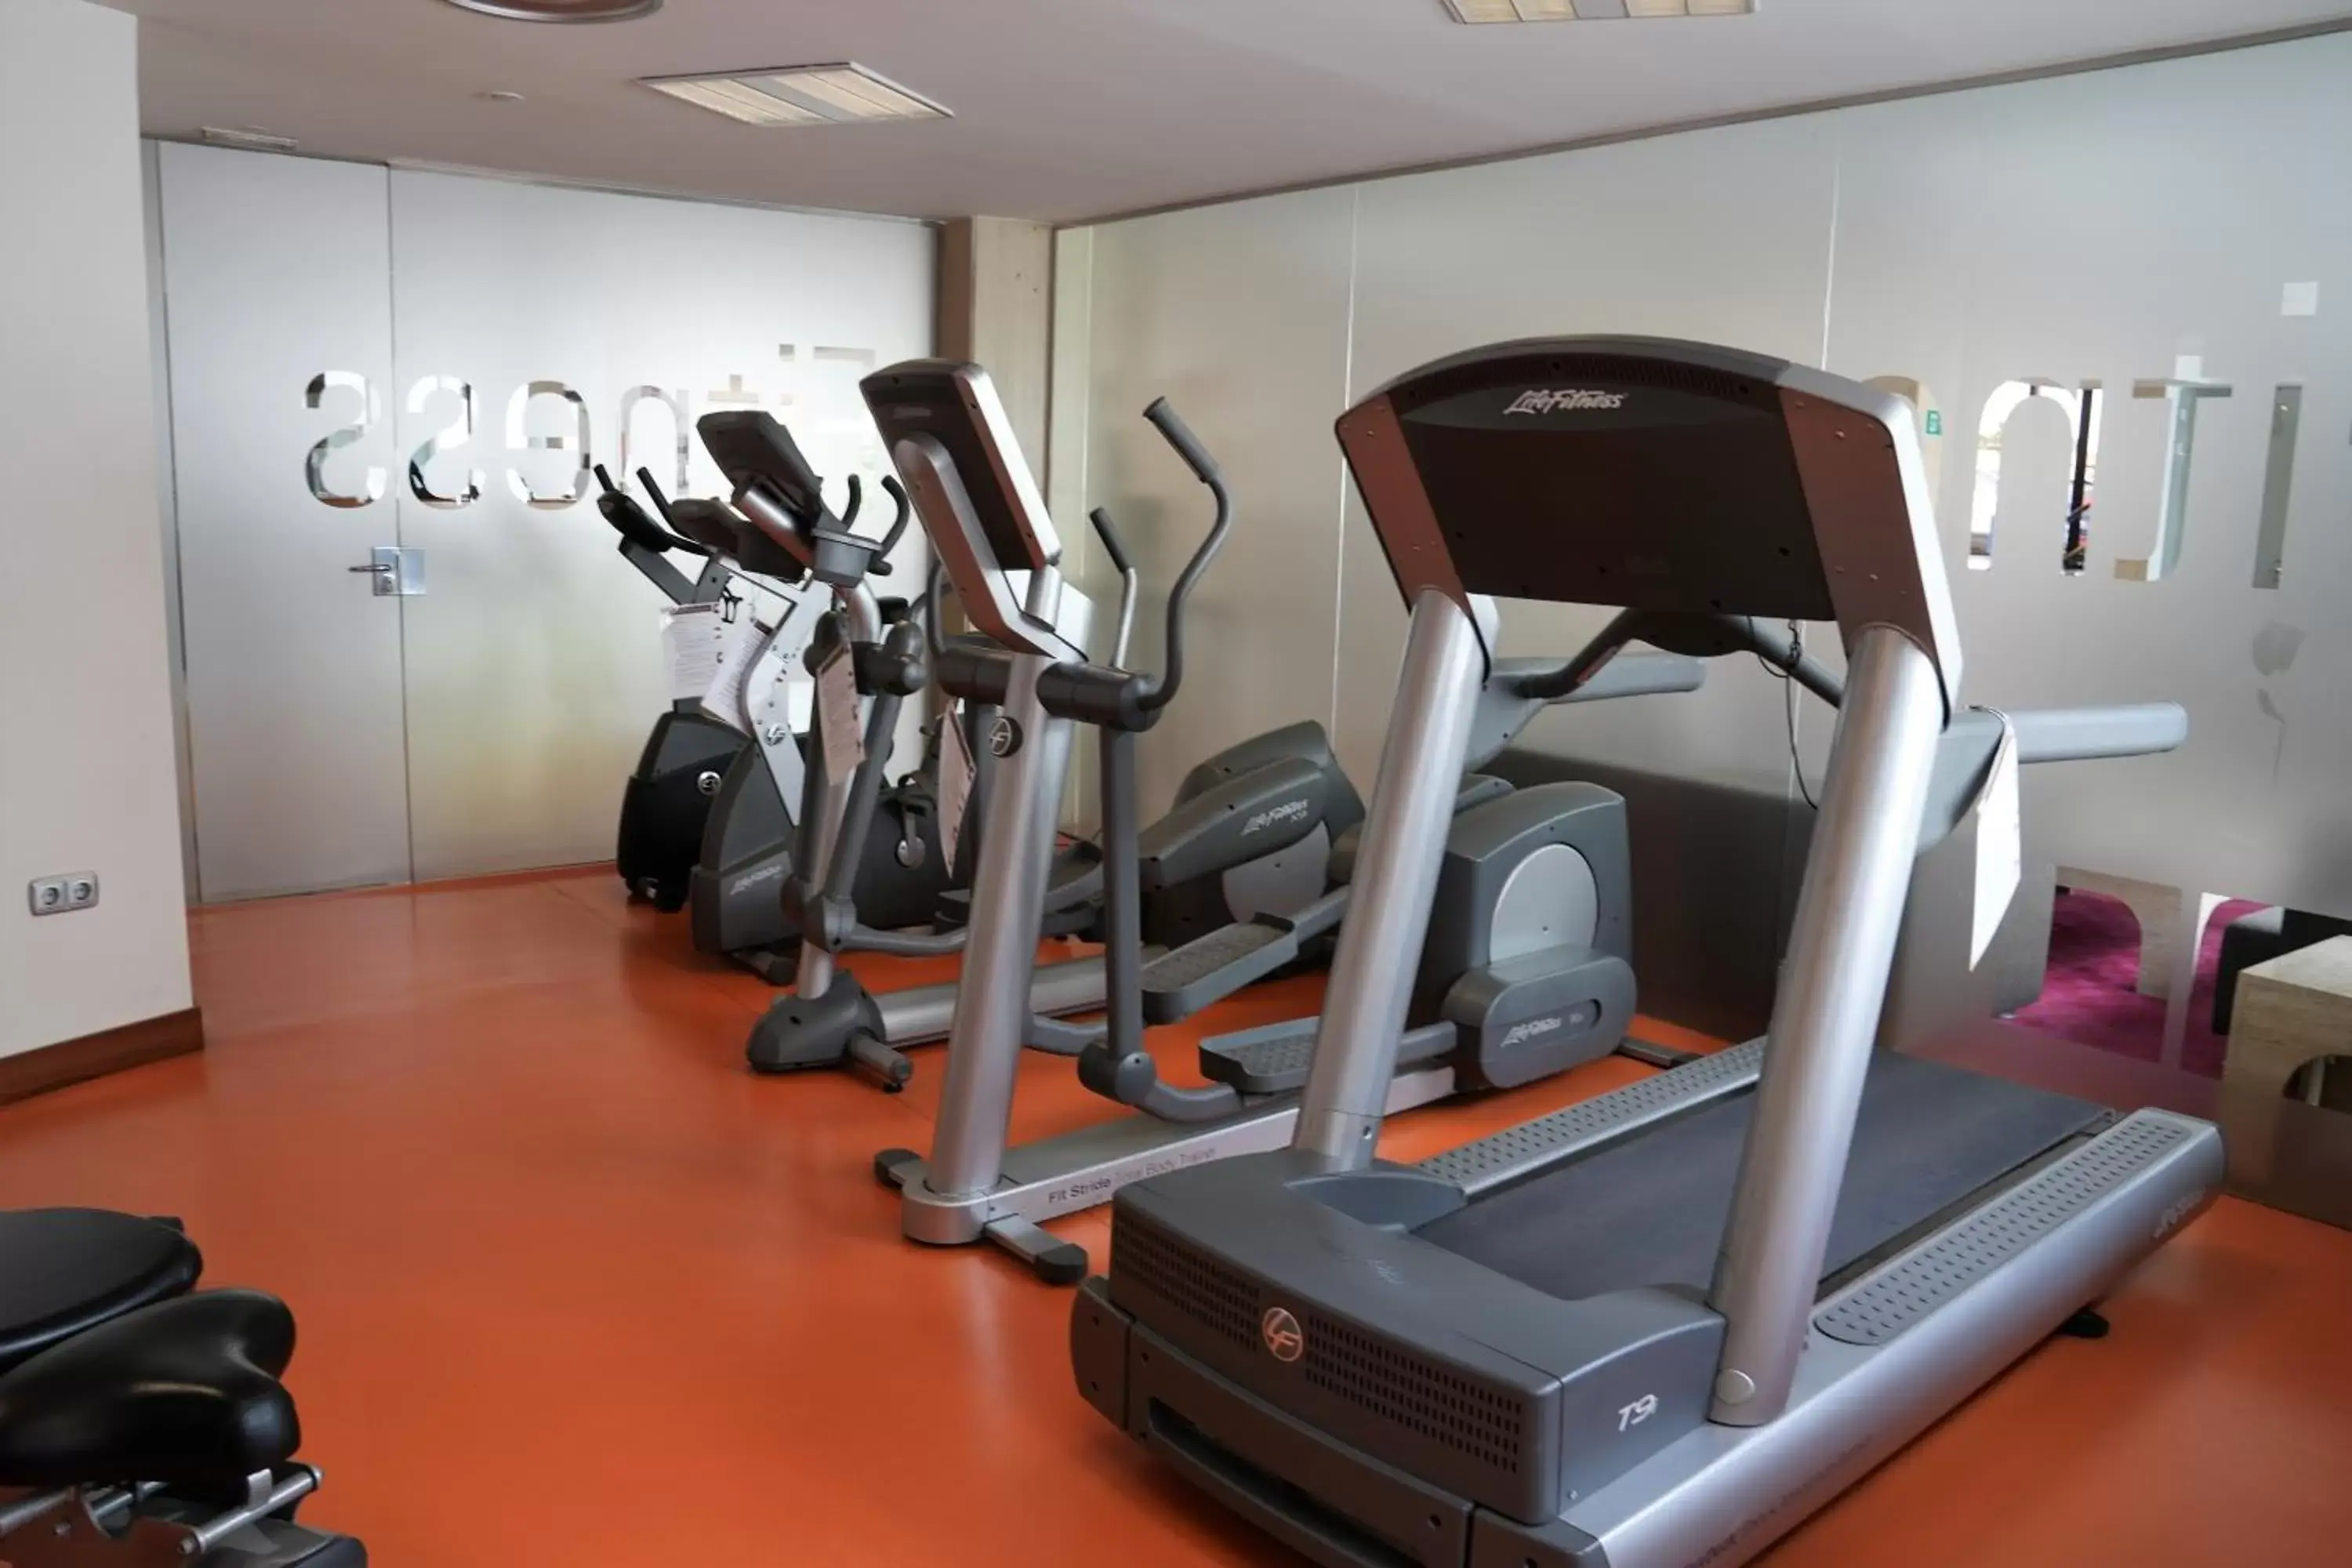 Fitness centre/facilities, Fitness Center/Facilities in Port Azafata Valencia